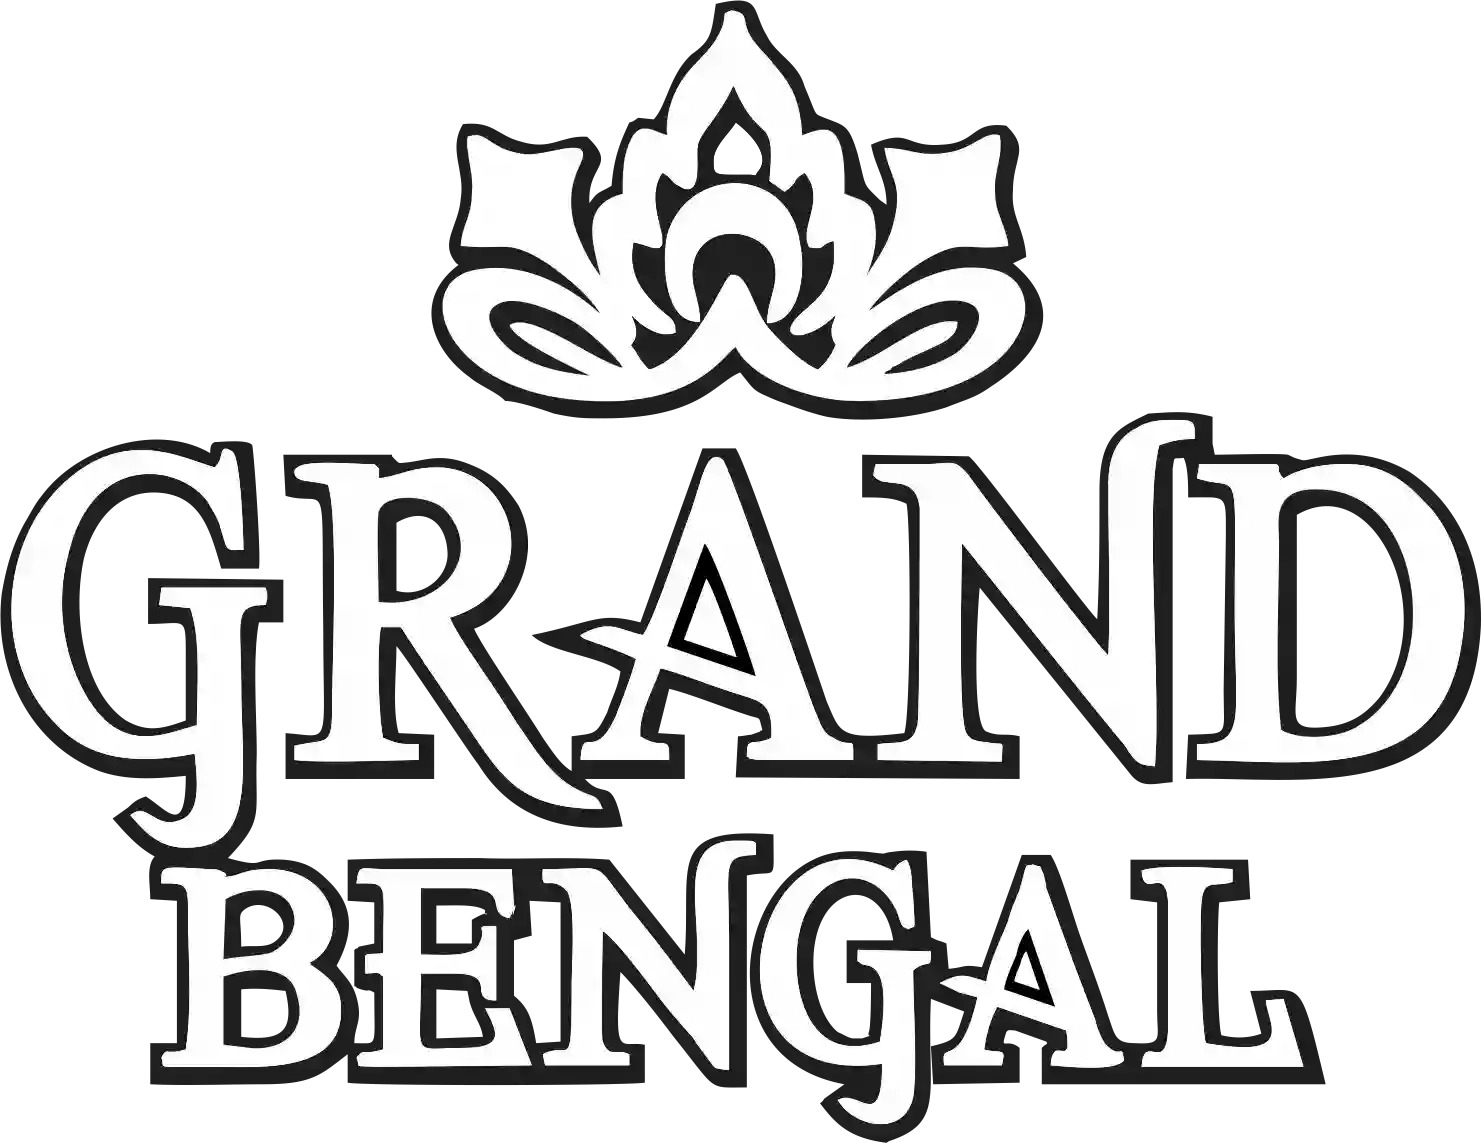 Grand Bengal Indian Restaurant